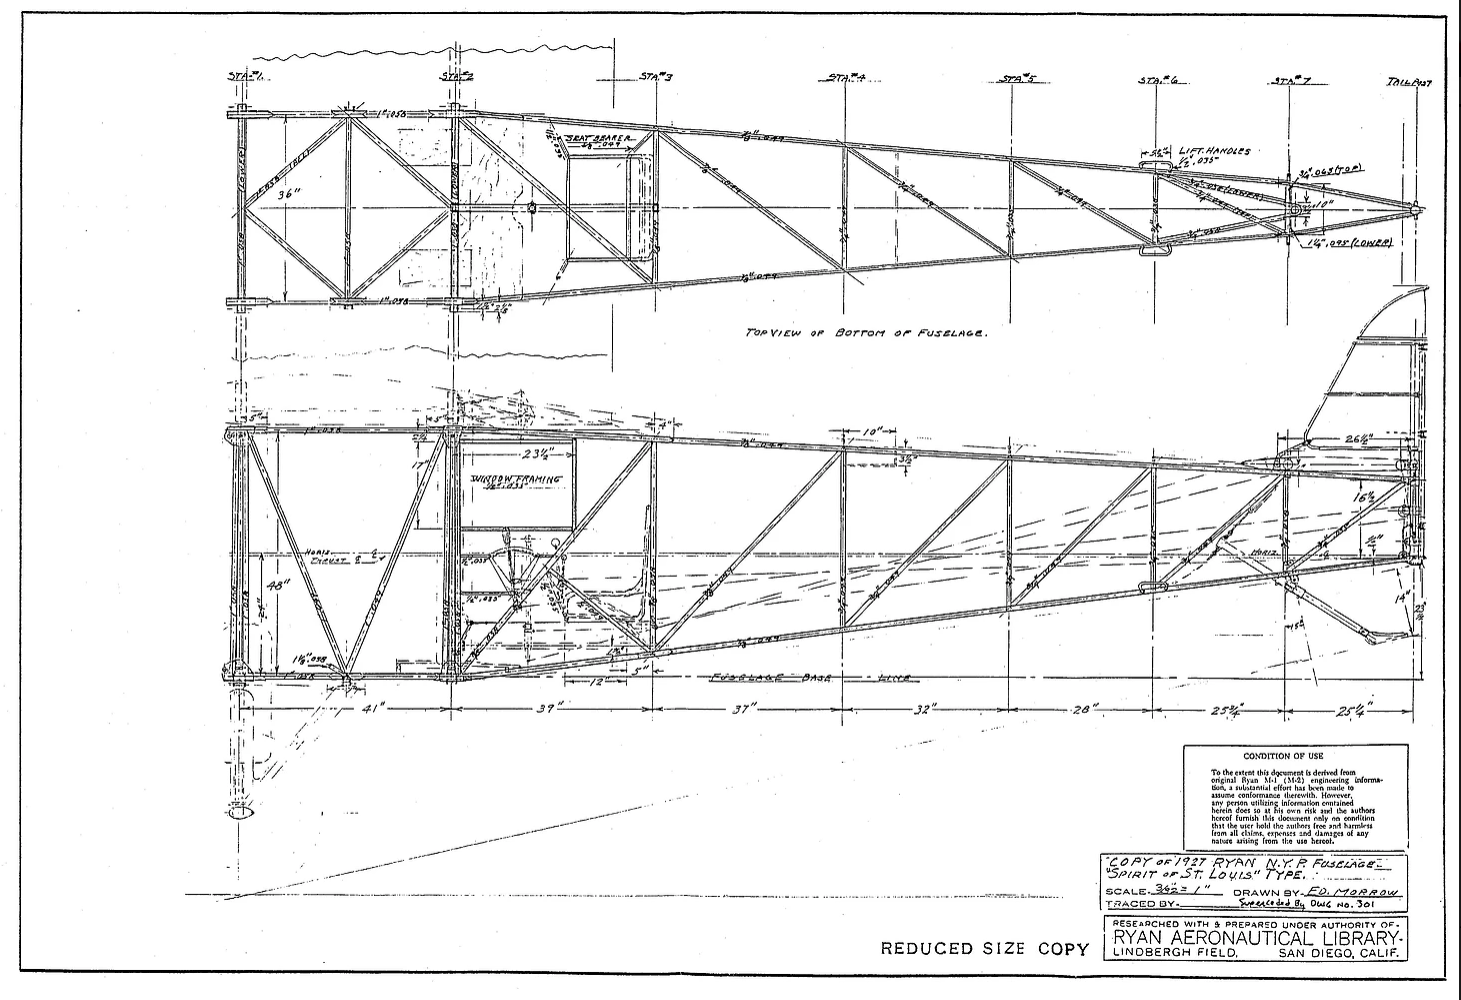 Spirit of St. Louis Airplane Blueprint. Drawing Plans of Spirit of